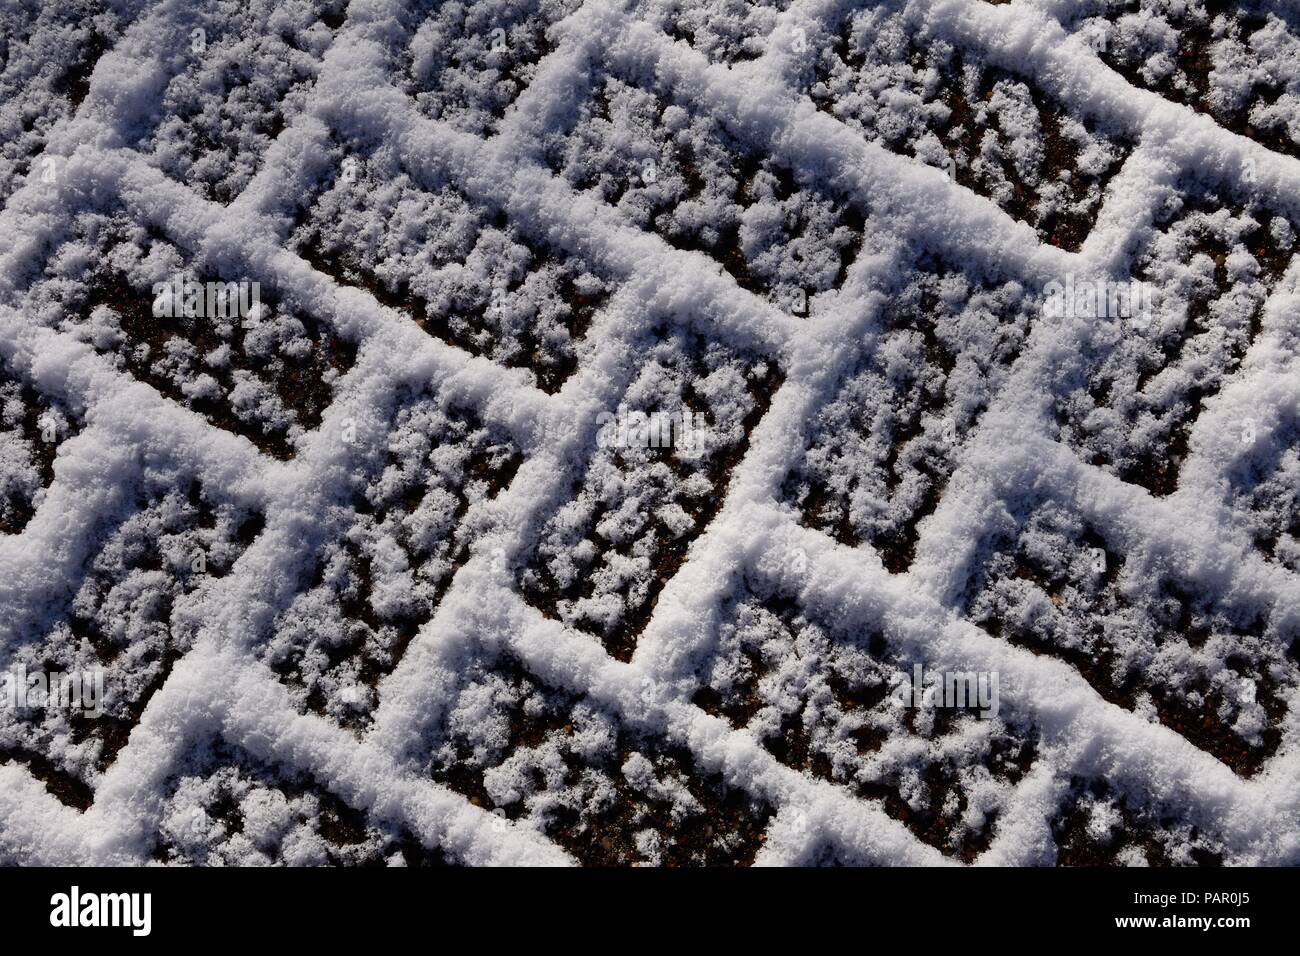 Snow covered block paving bricks, England, UK, Western Europe. Stock Photo